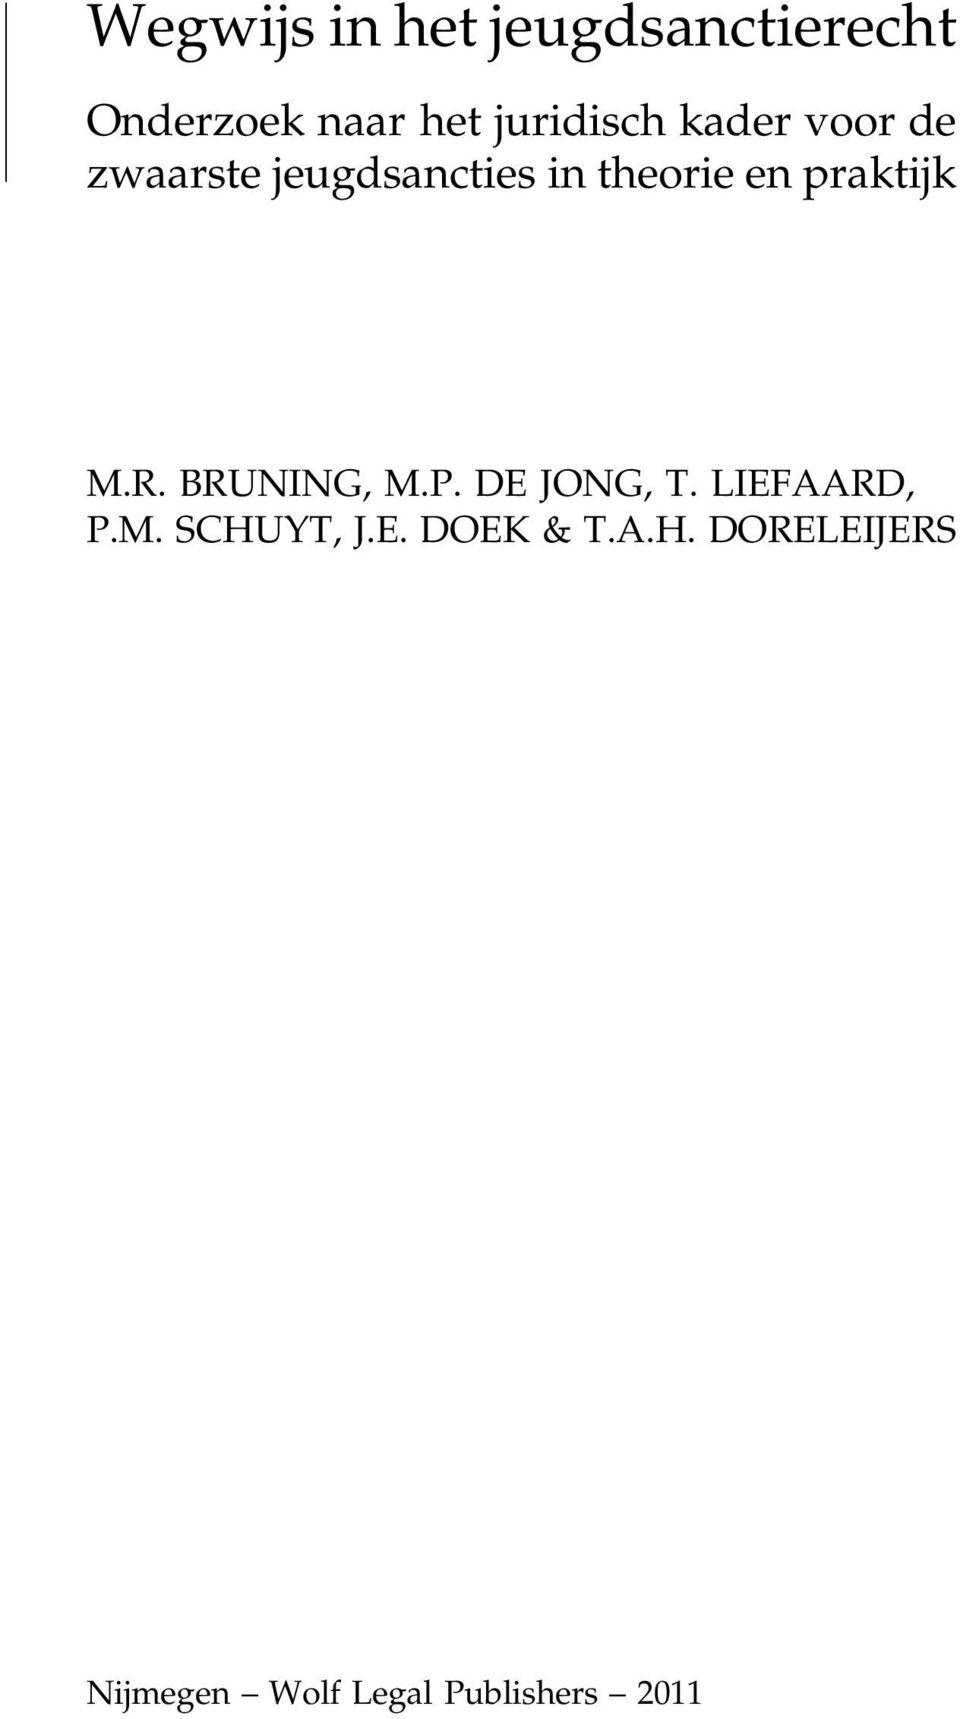 praktijk M.R. BRUNING, M.P. DE JONG, T. LIEFAARD, P.M. SCHUYT, J.